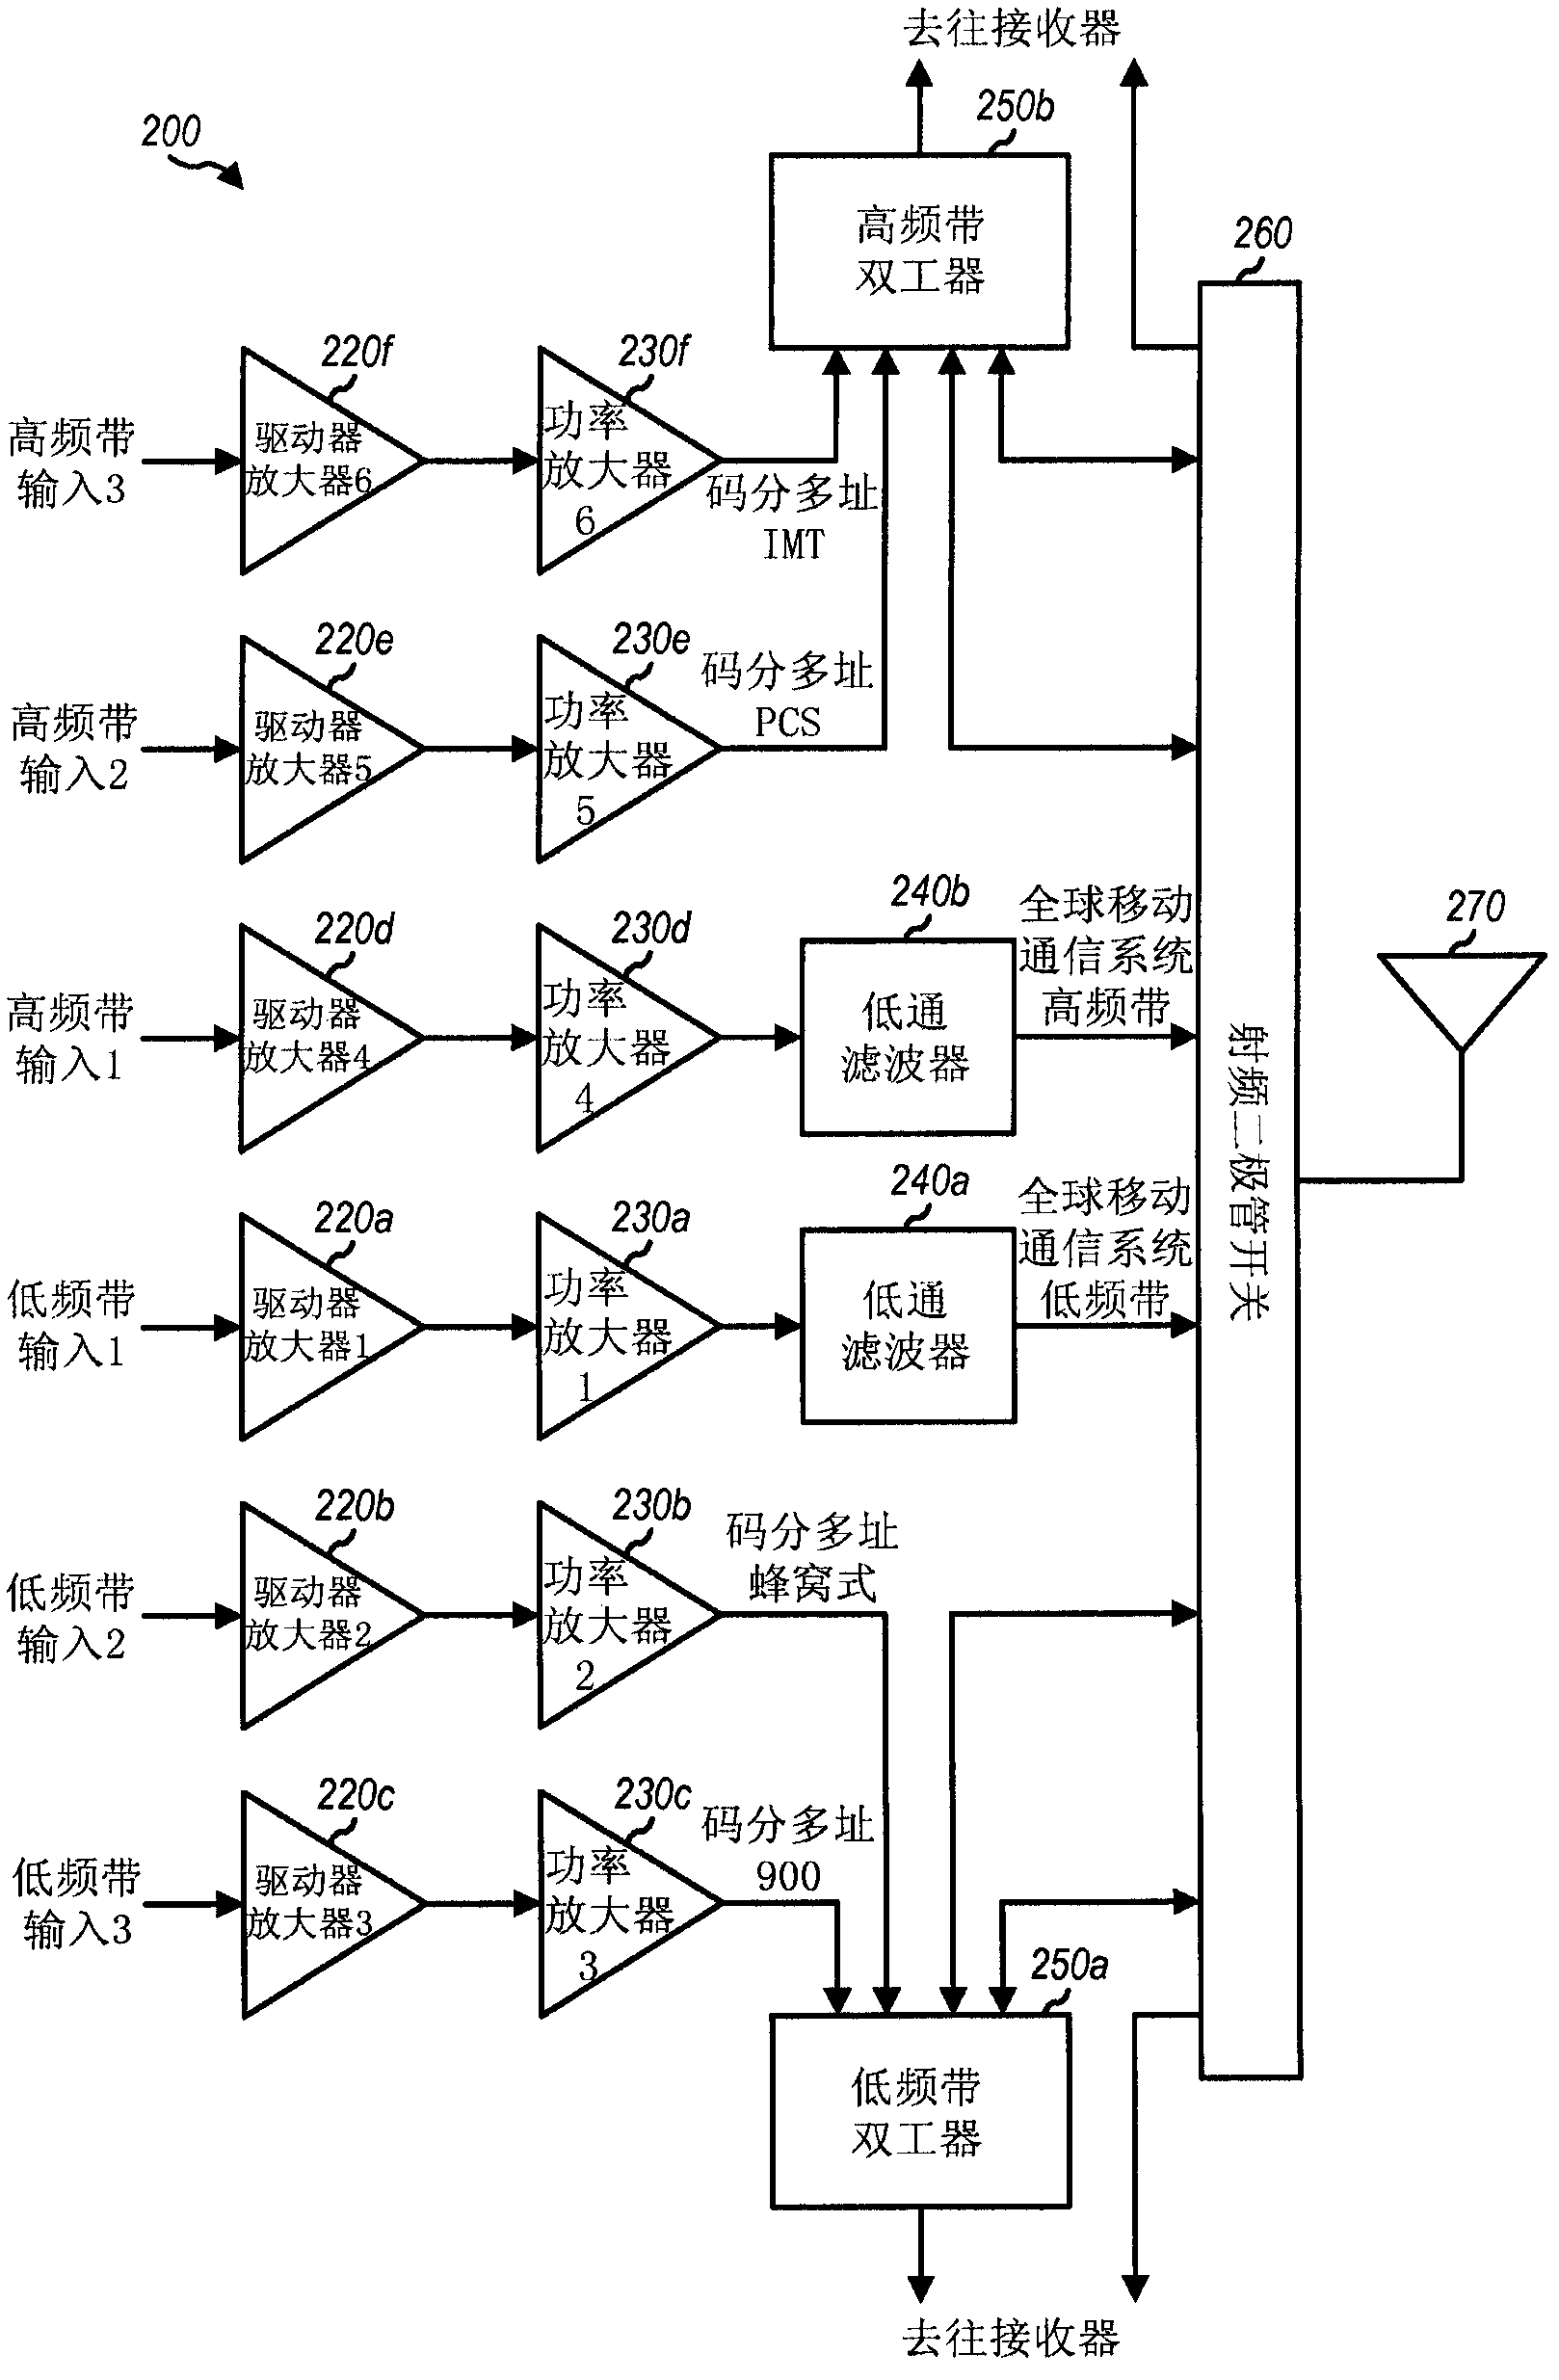 Multi-mode multi-band power amplifier module